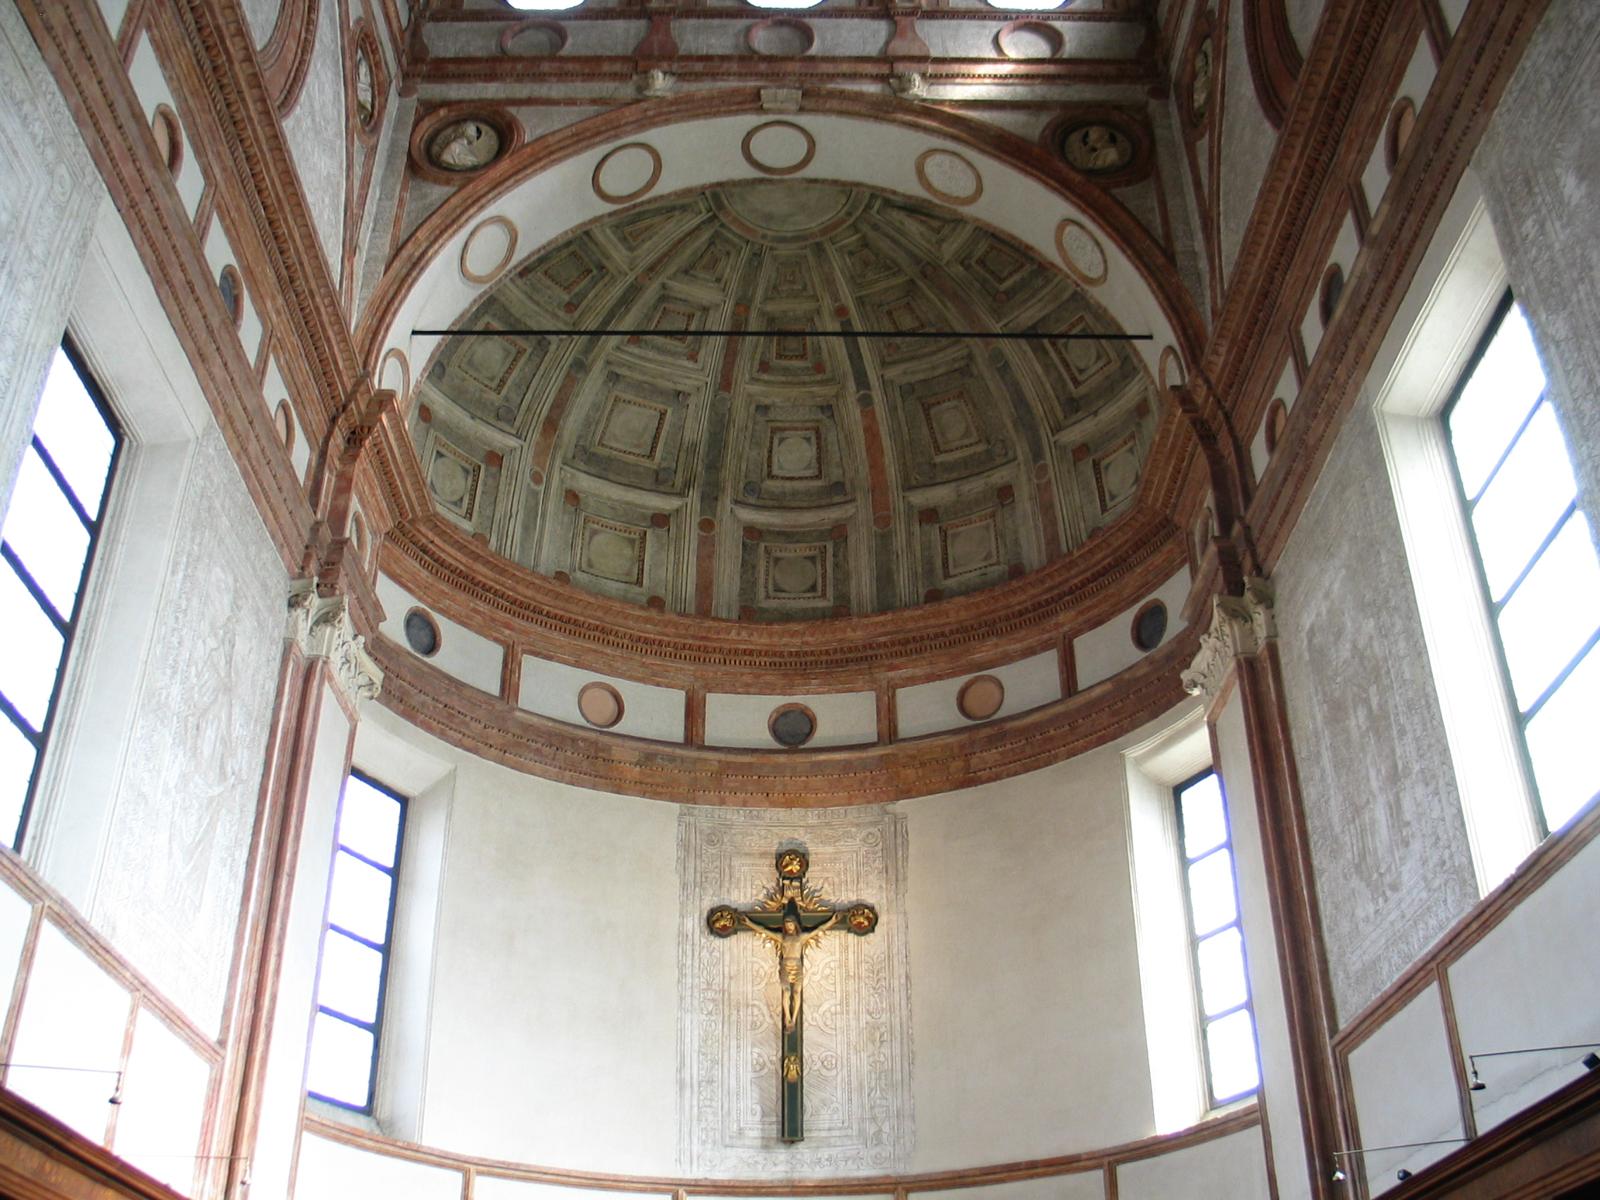 Inside a church